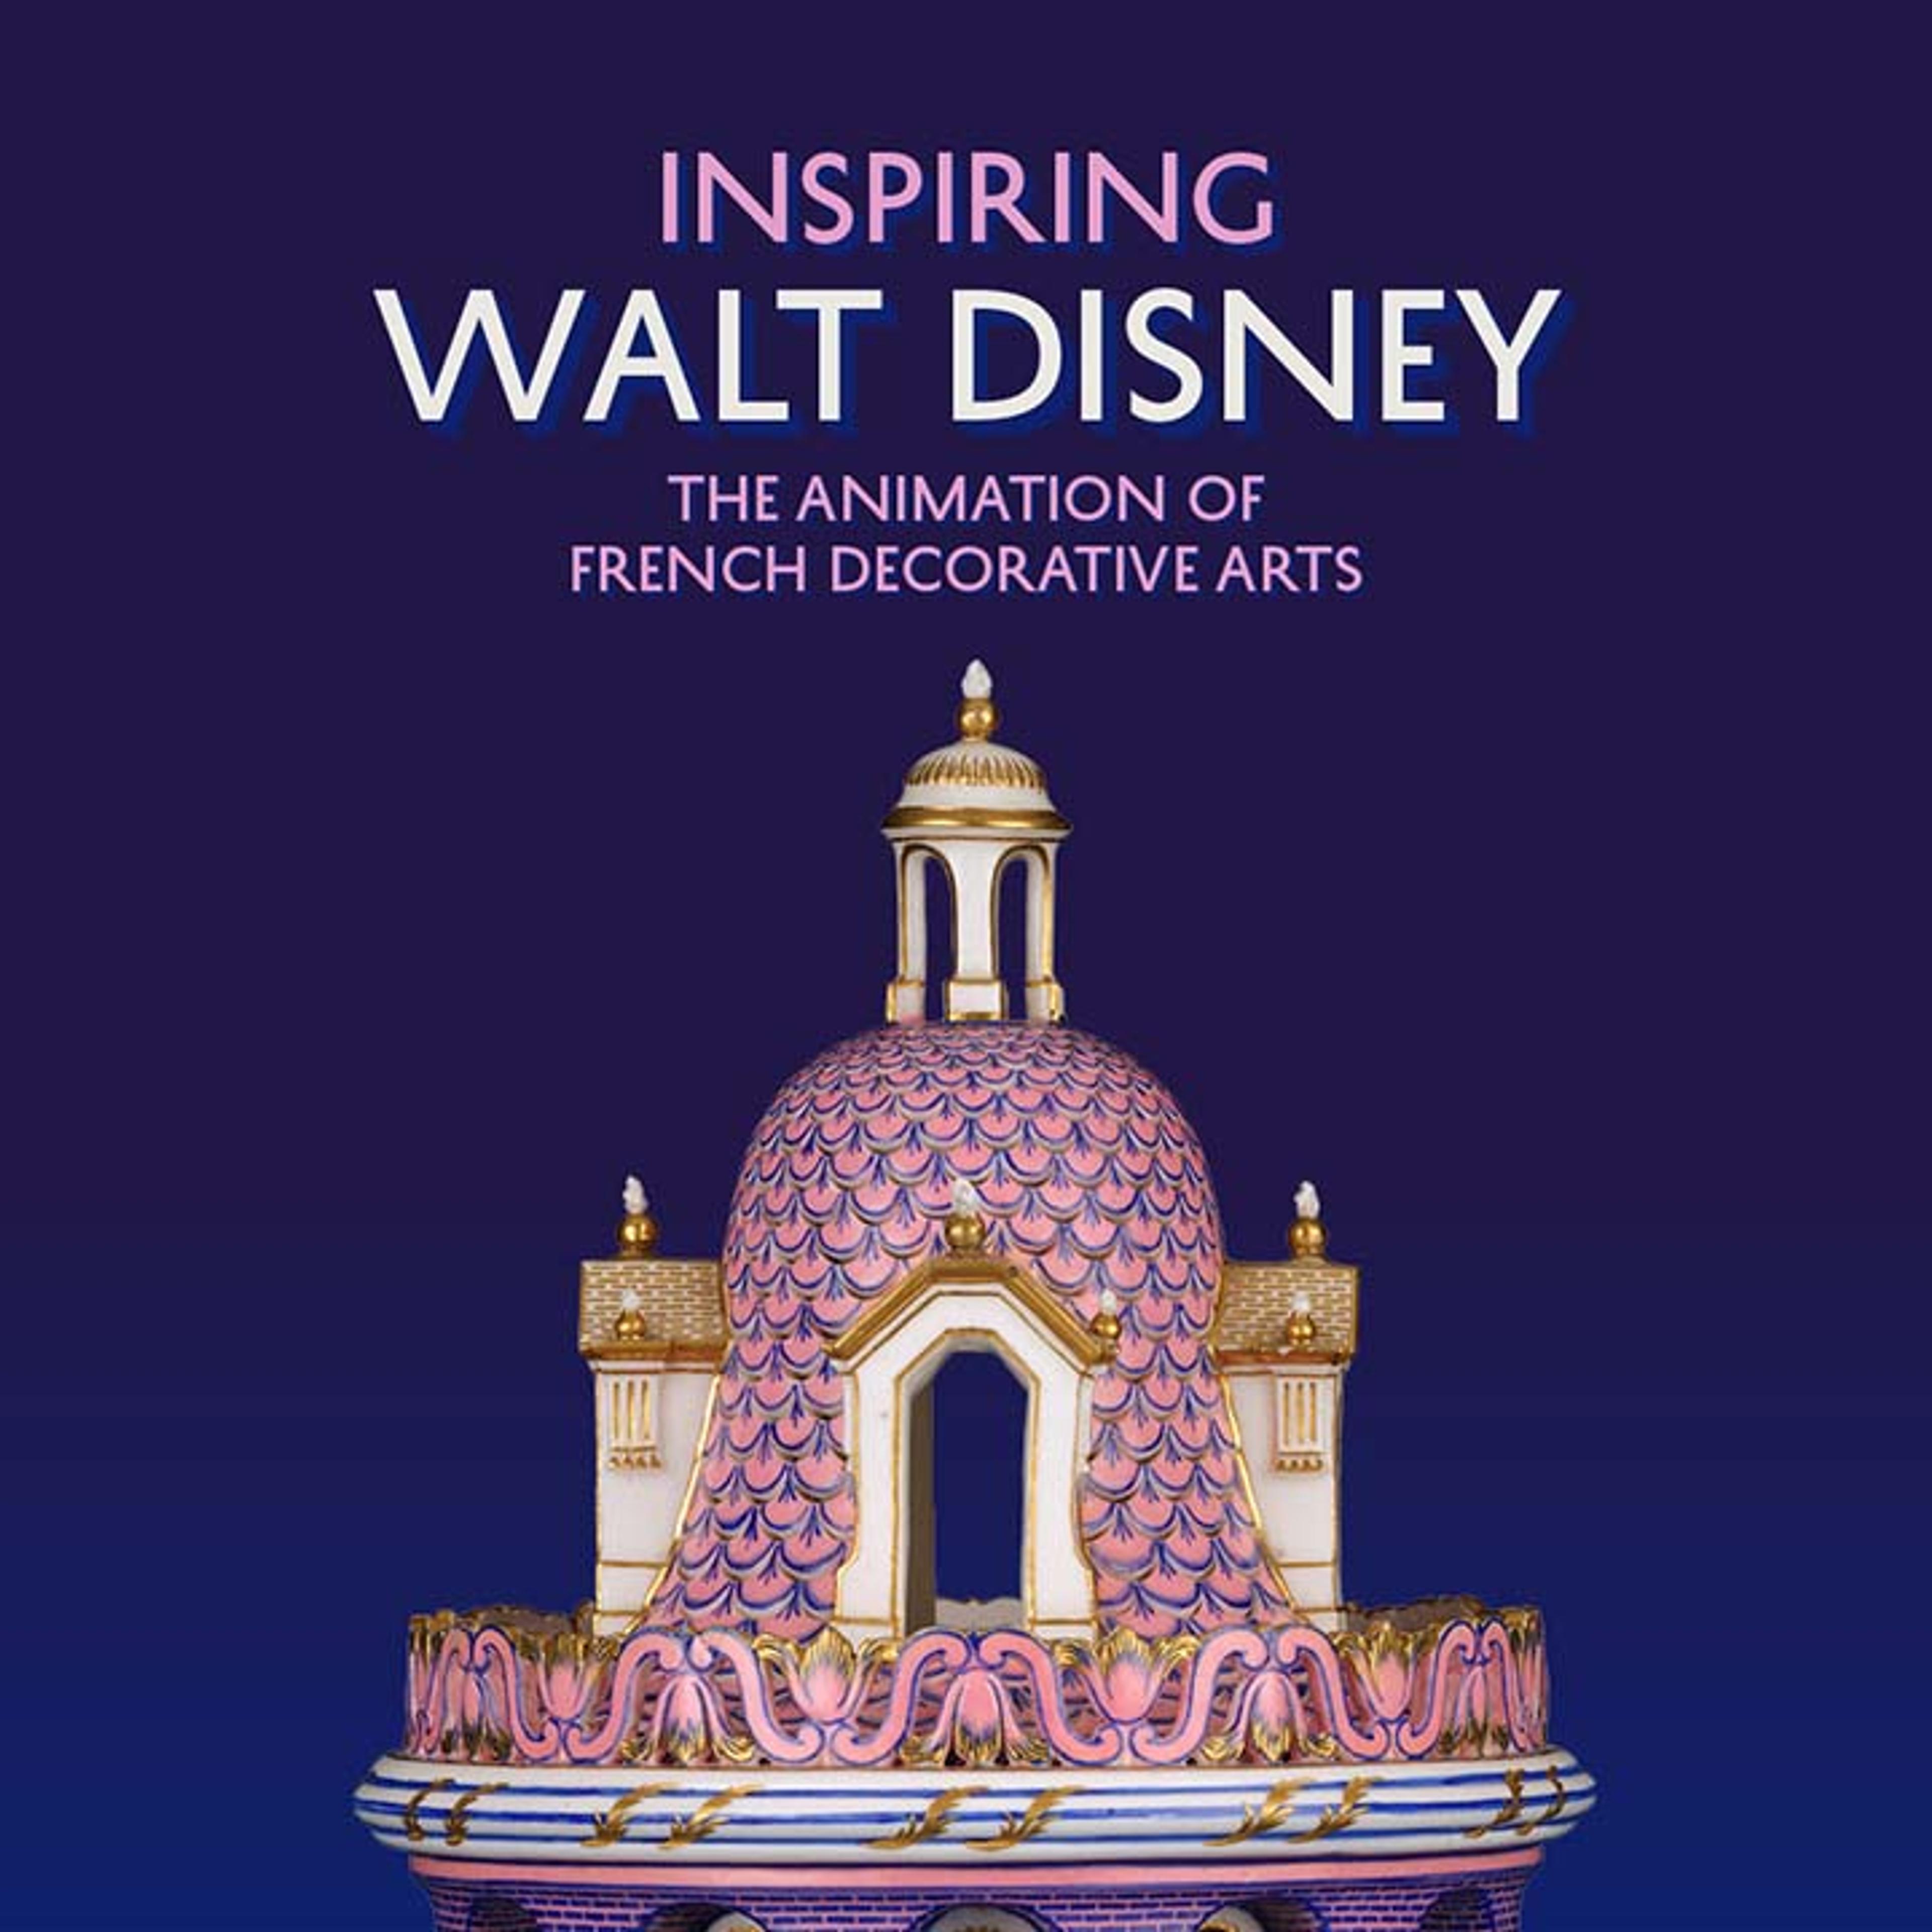 Promotional graphic for "Inspiring Walt Disney"